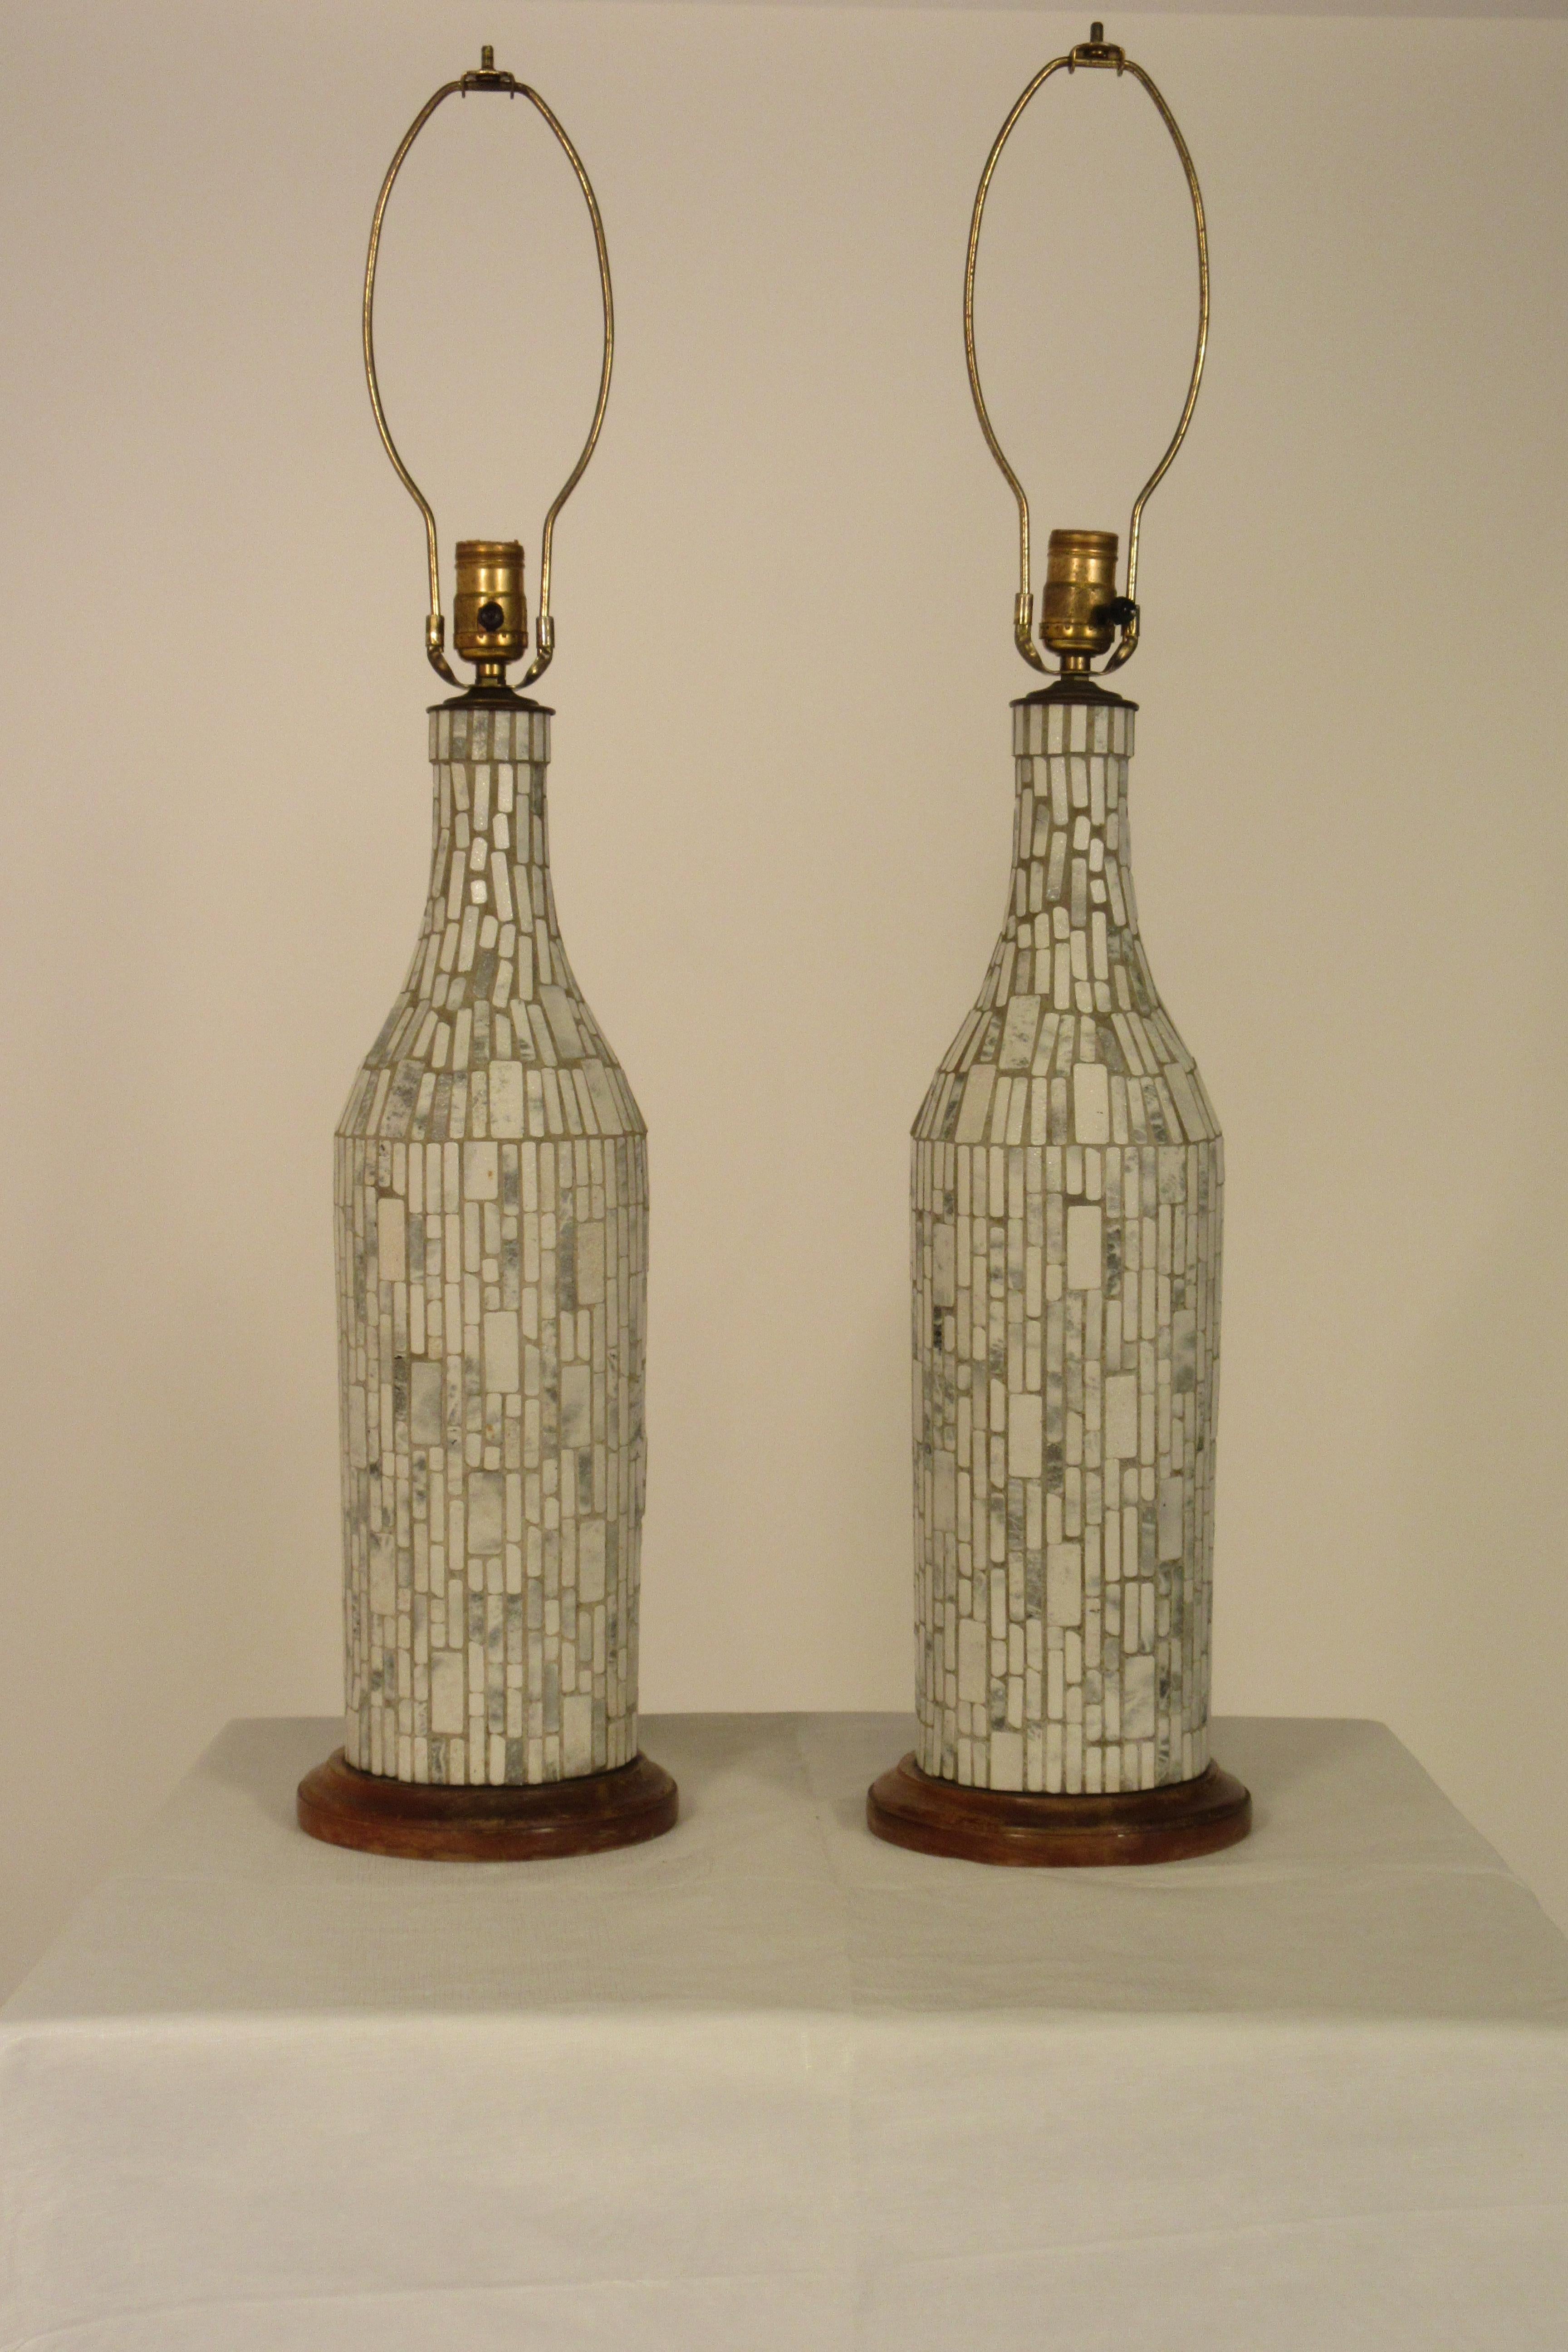 1950s handmade ceramic tile lamp on wood bases. Need rewiring.